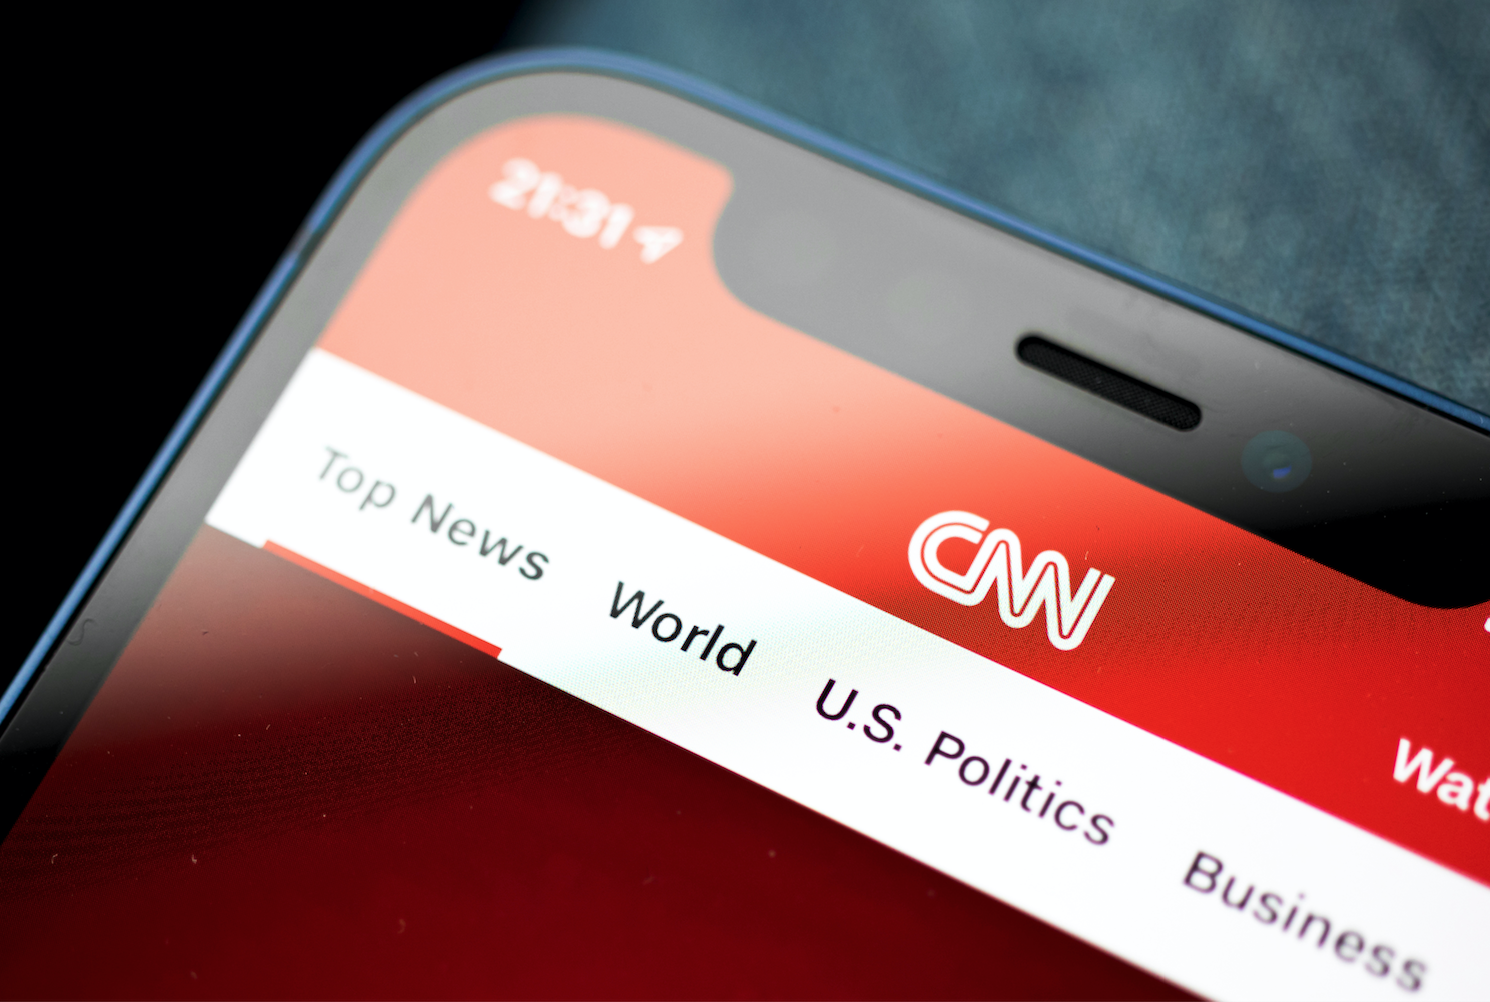 Interview: CNN Digital's Smolkin and Straight on Trump, misinformation and Twitter trolls